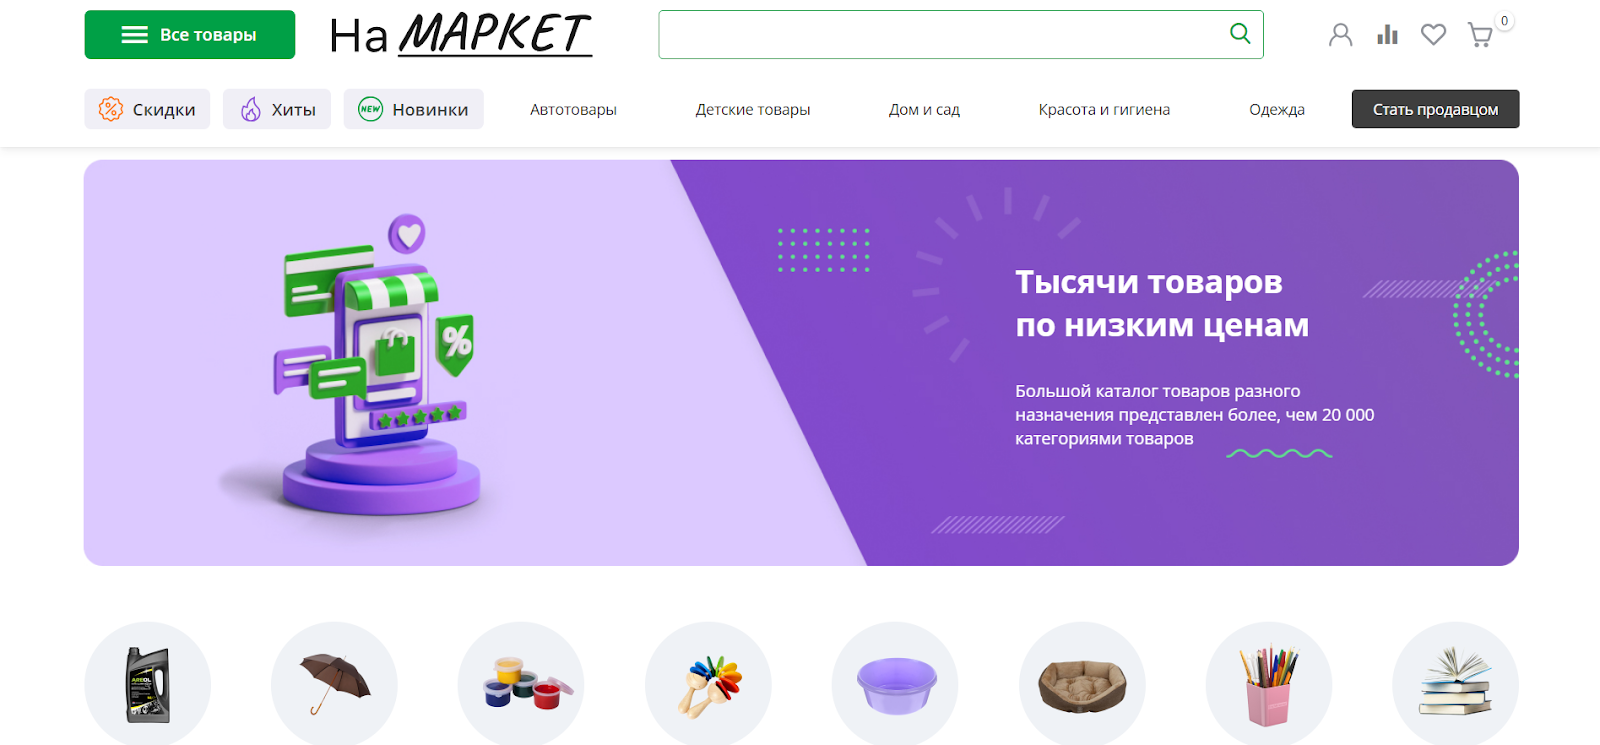 НаМаркет - русский маркетплейс